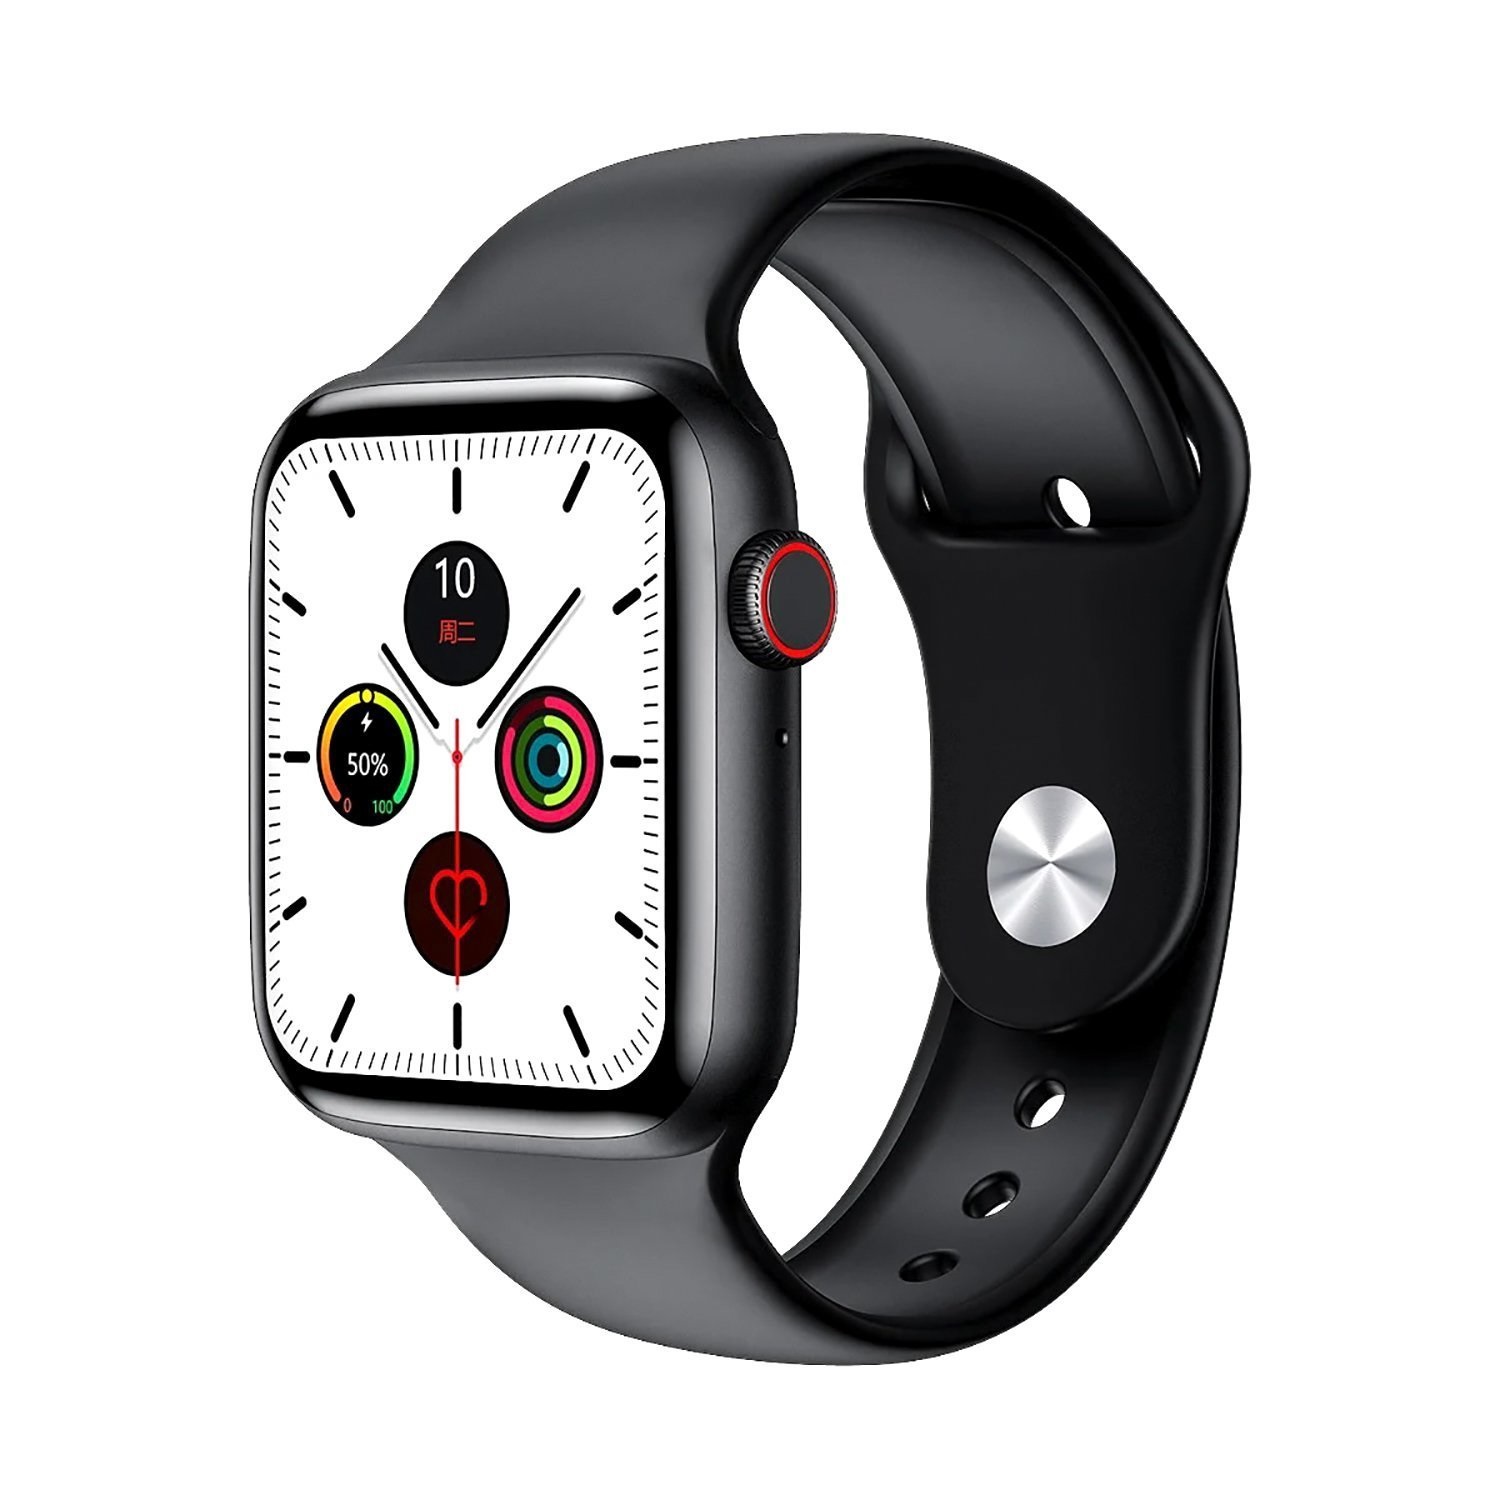 Часы м тек. Смарт часы Iwo w26. Smart watch w26 Plus. Смарт-часы w26+ Black. Эппл вотч 4.